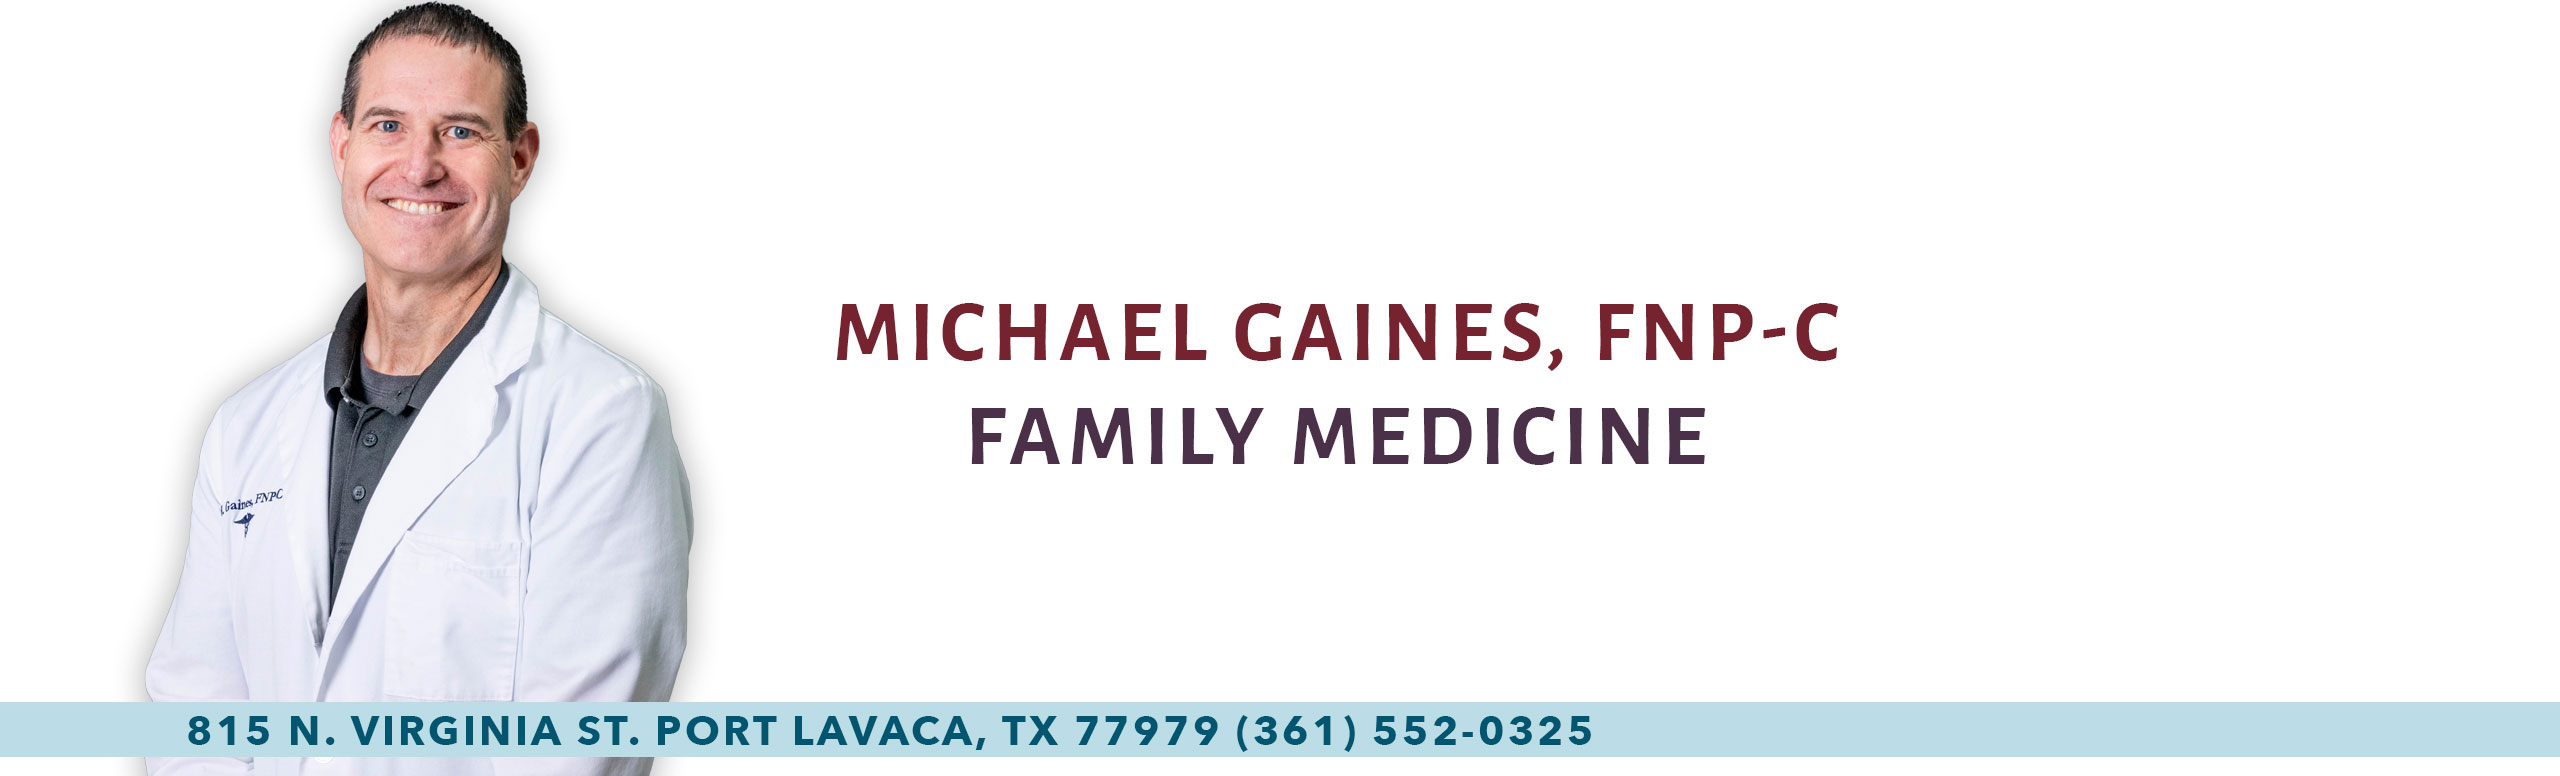 Michael Gaines, FNP
Family Medicine